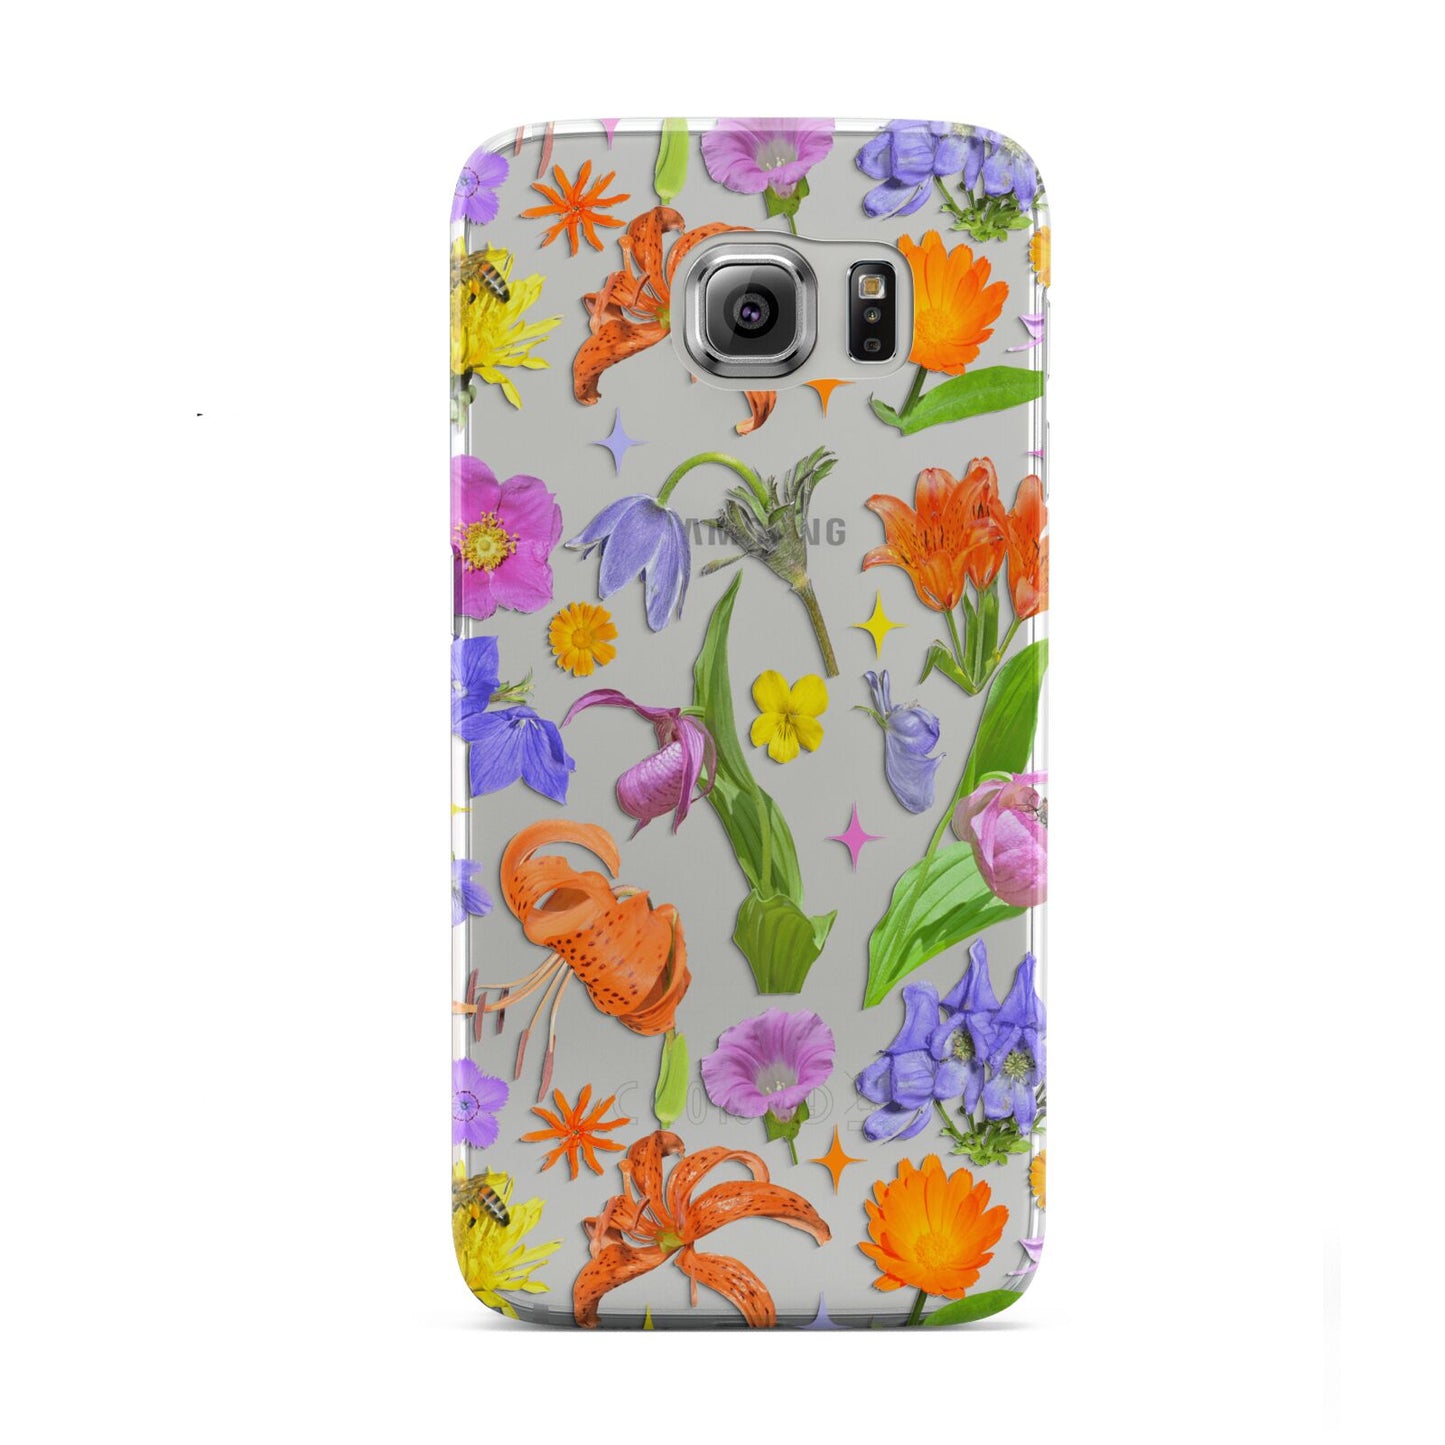 Floral Mix Samsung Galaxy S6 Case